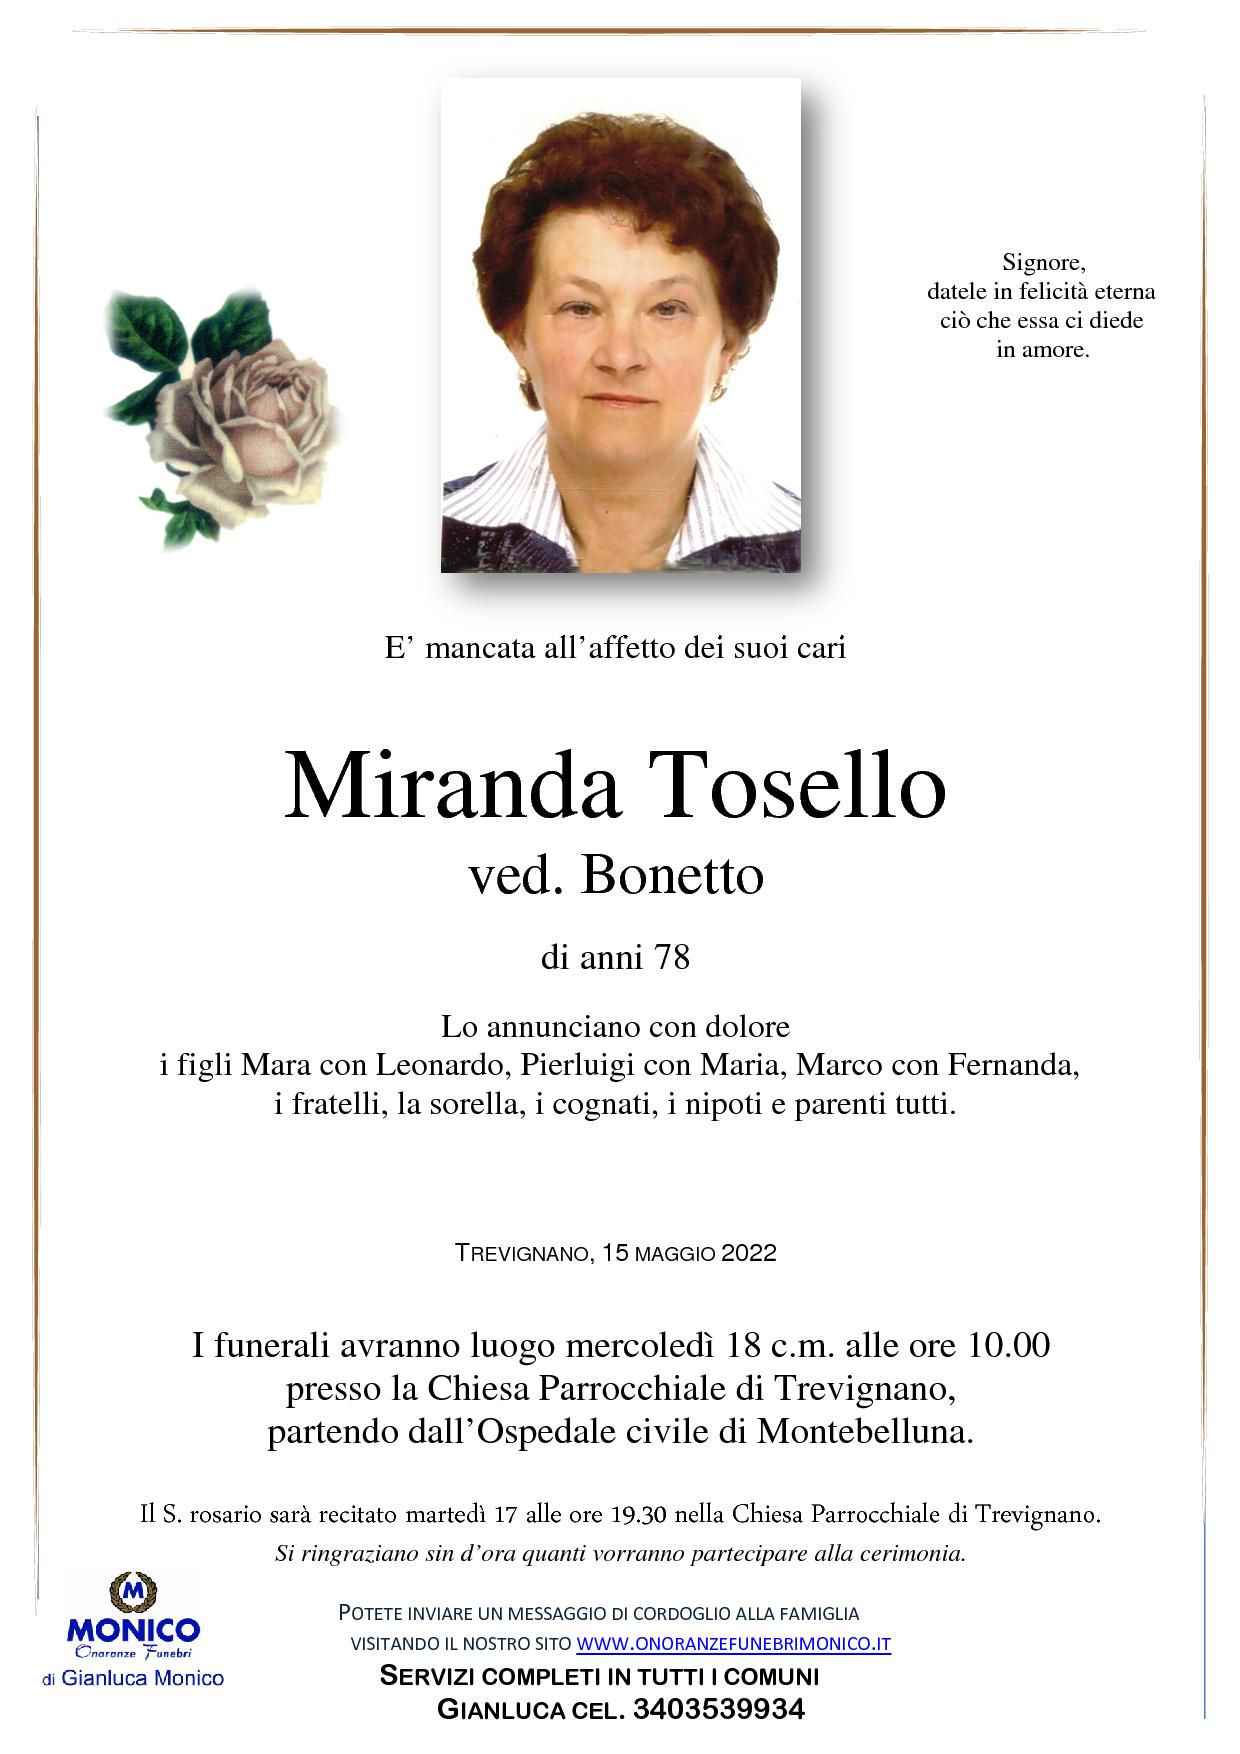 Tosello Miranda